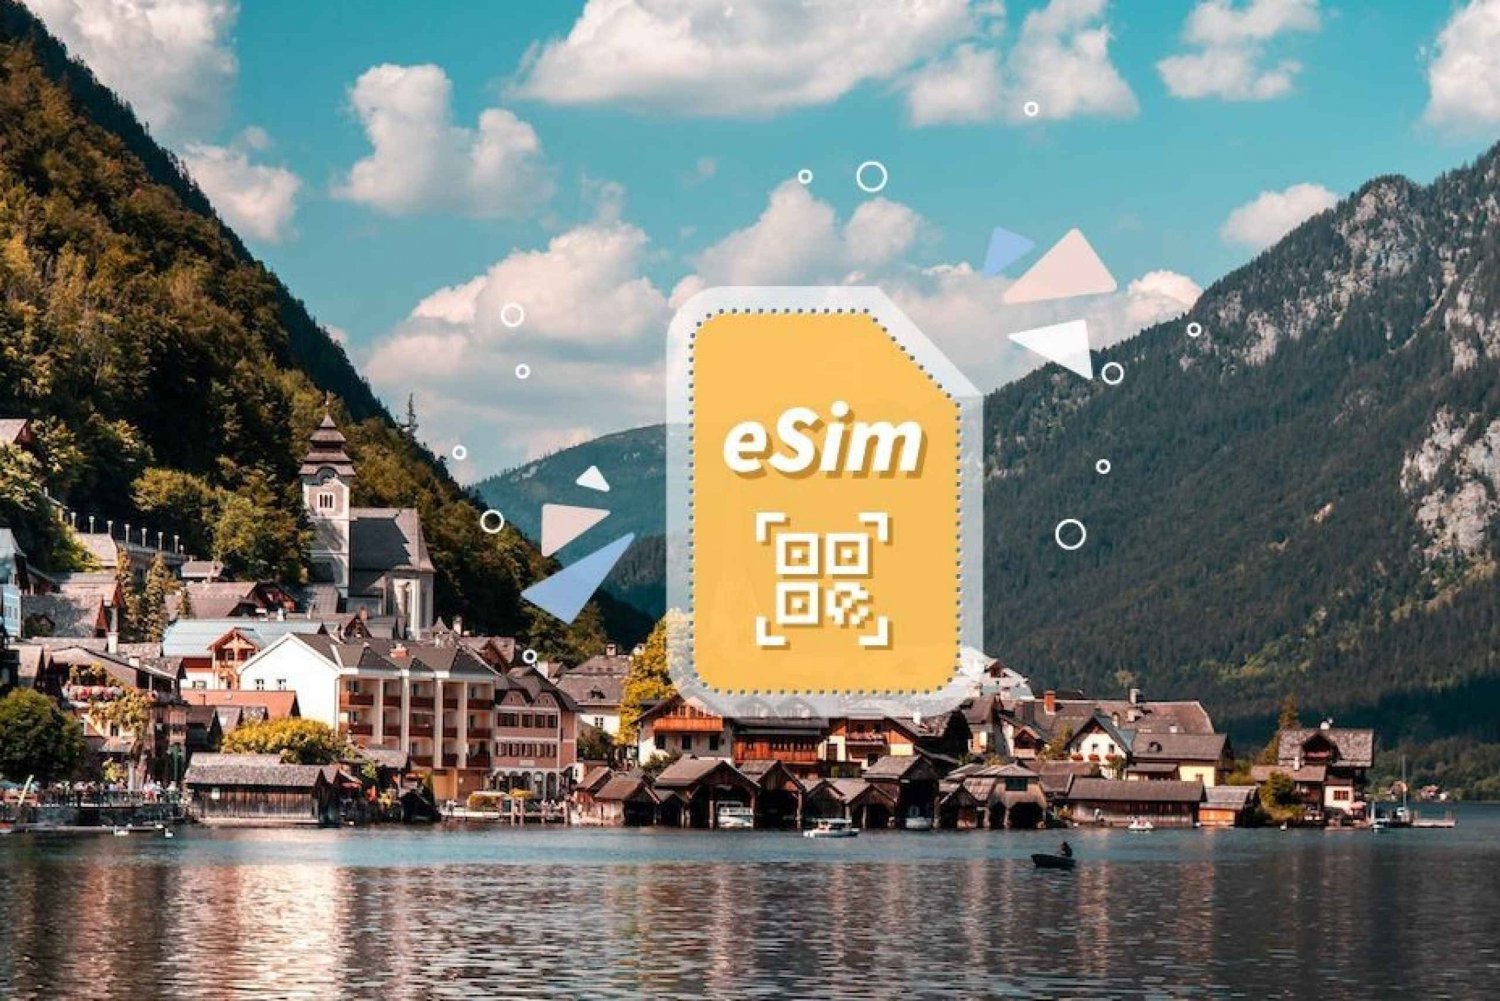 Østrig/Europa: 5G eSim mobildataplan